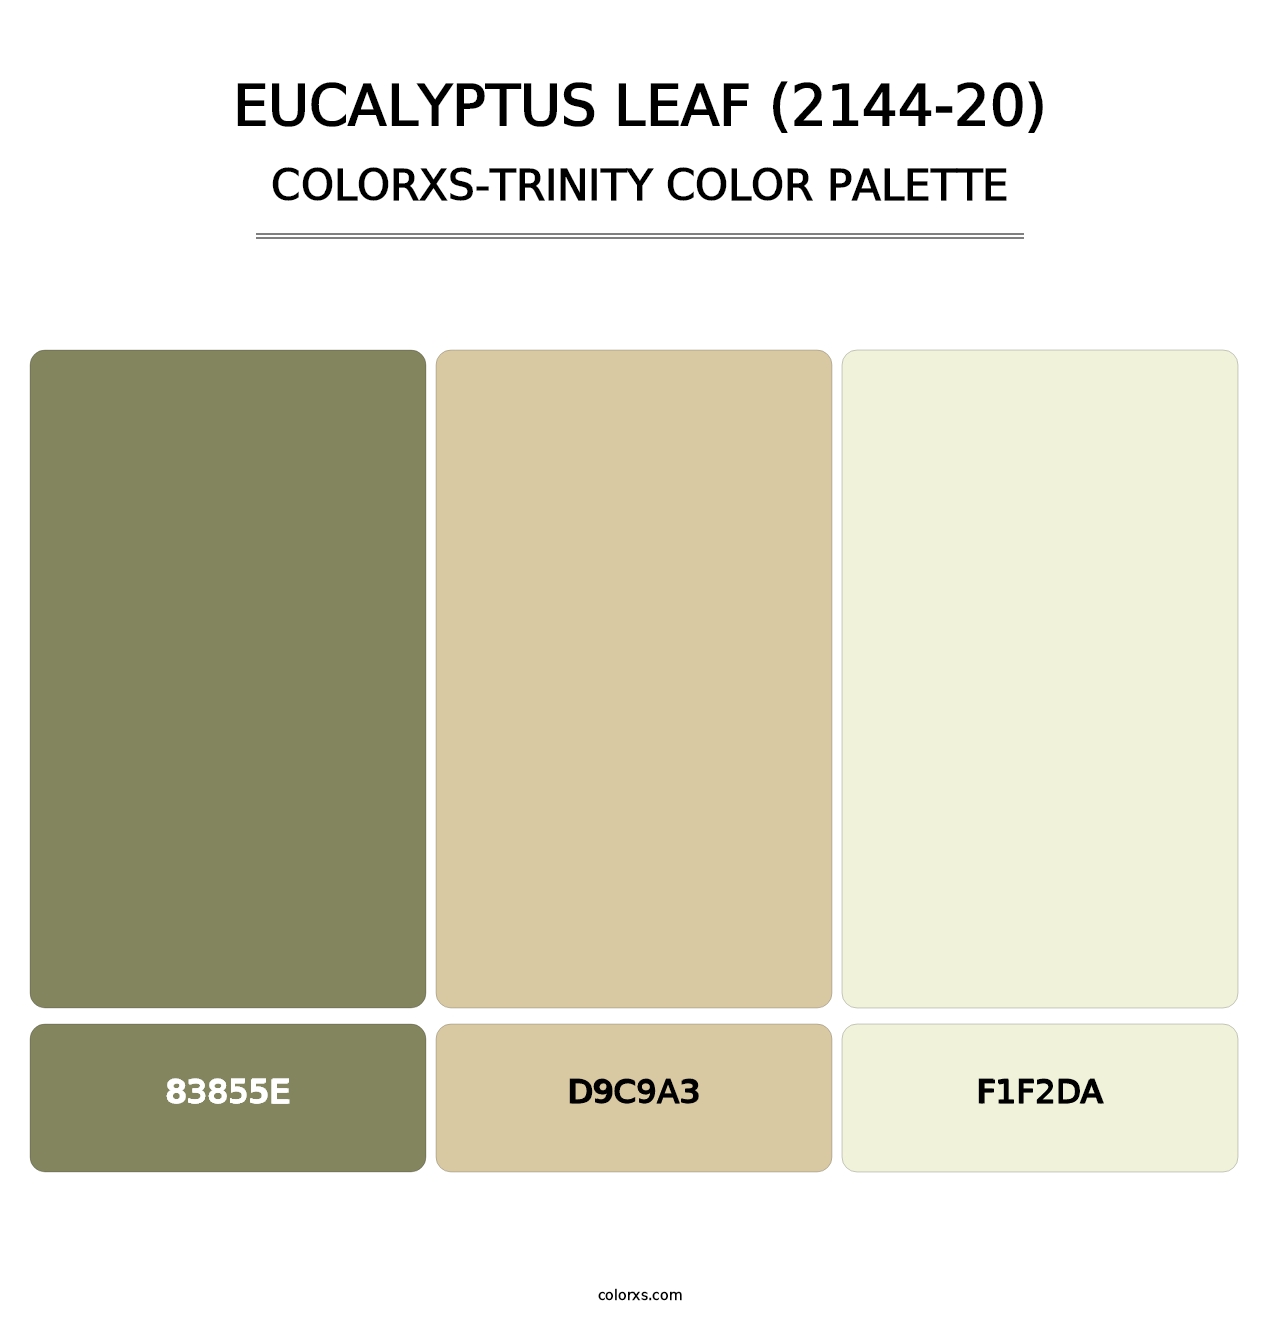 Eucalyptus Leaf (2144-20) - Colorxs Trinity Palette